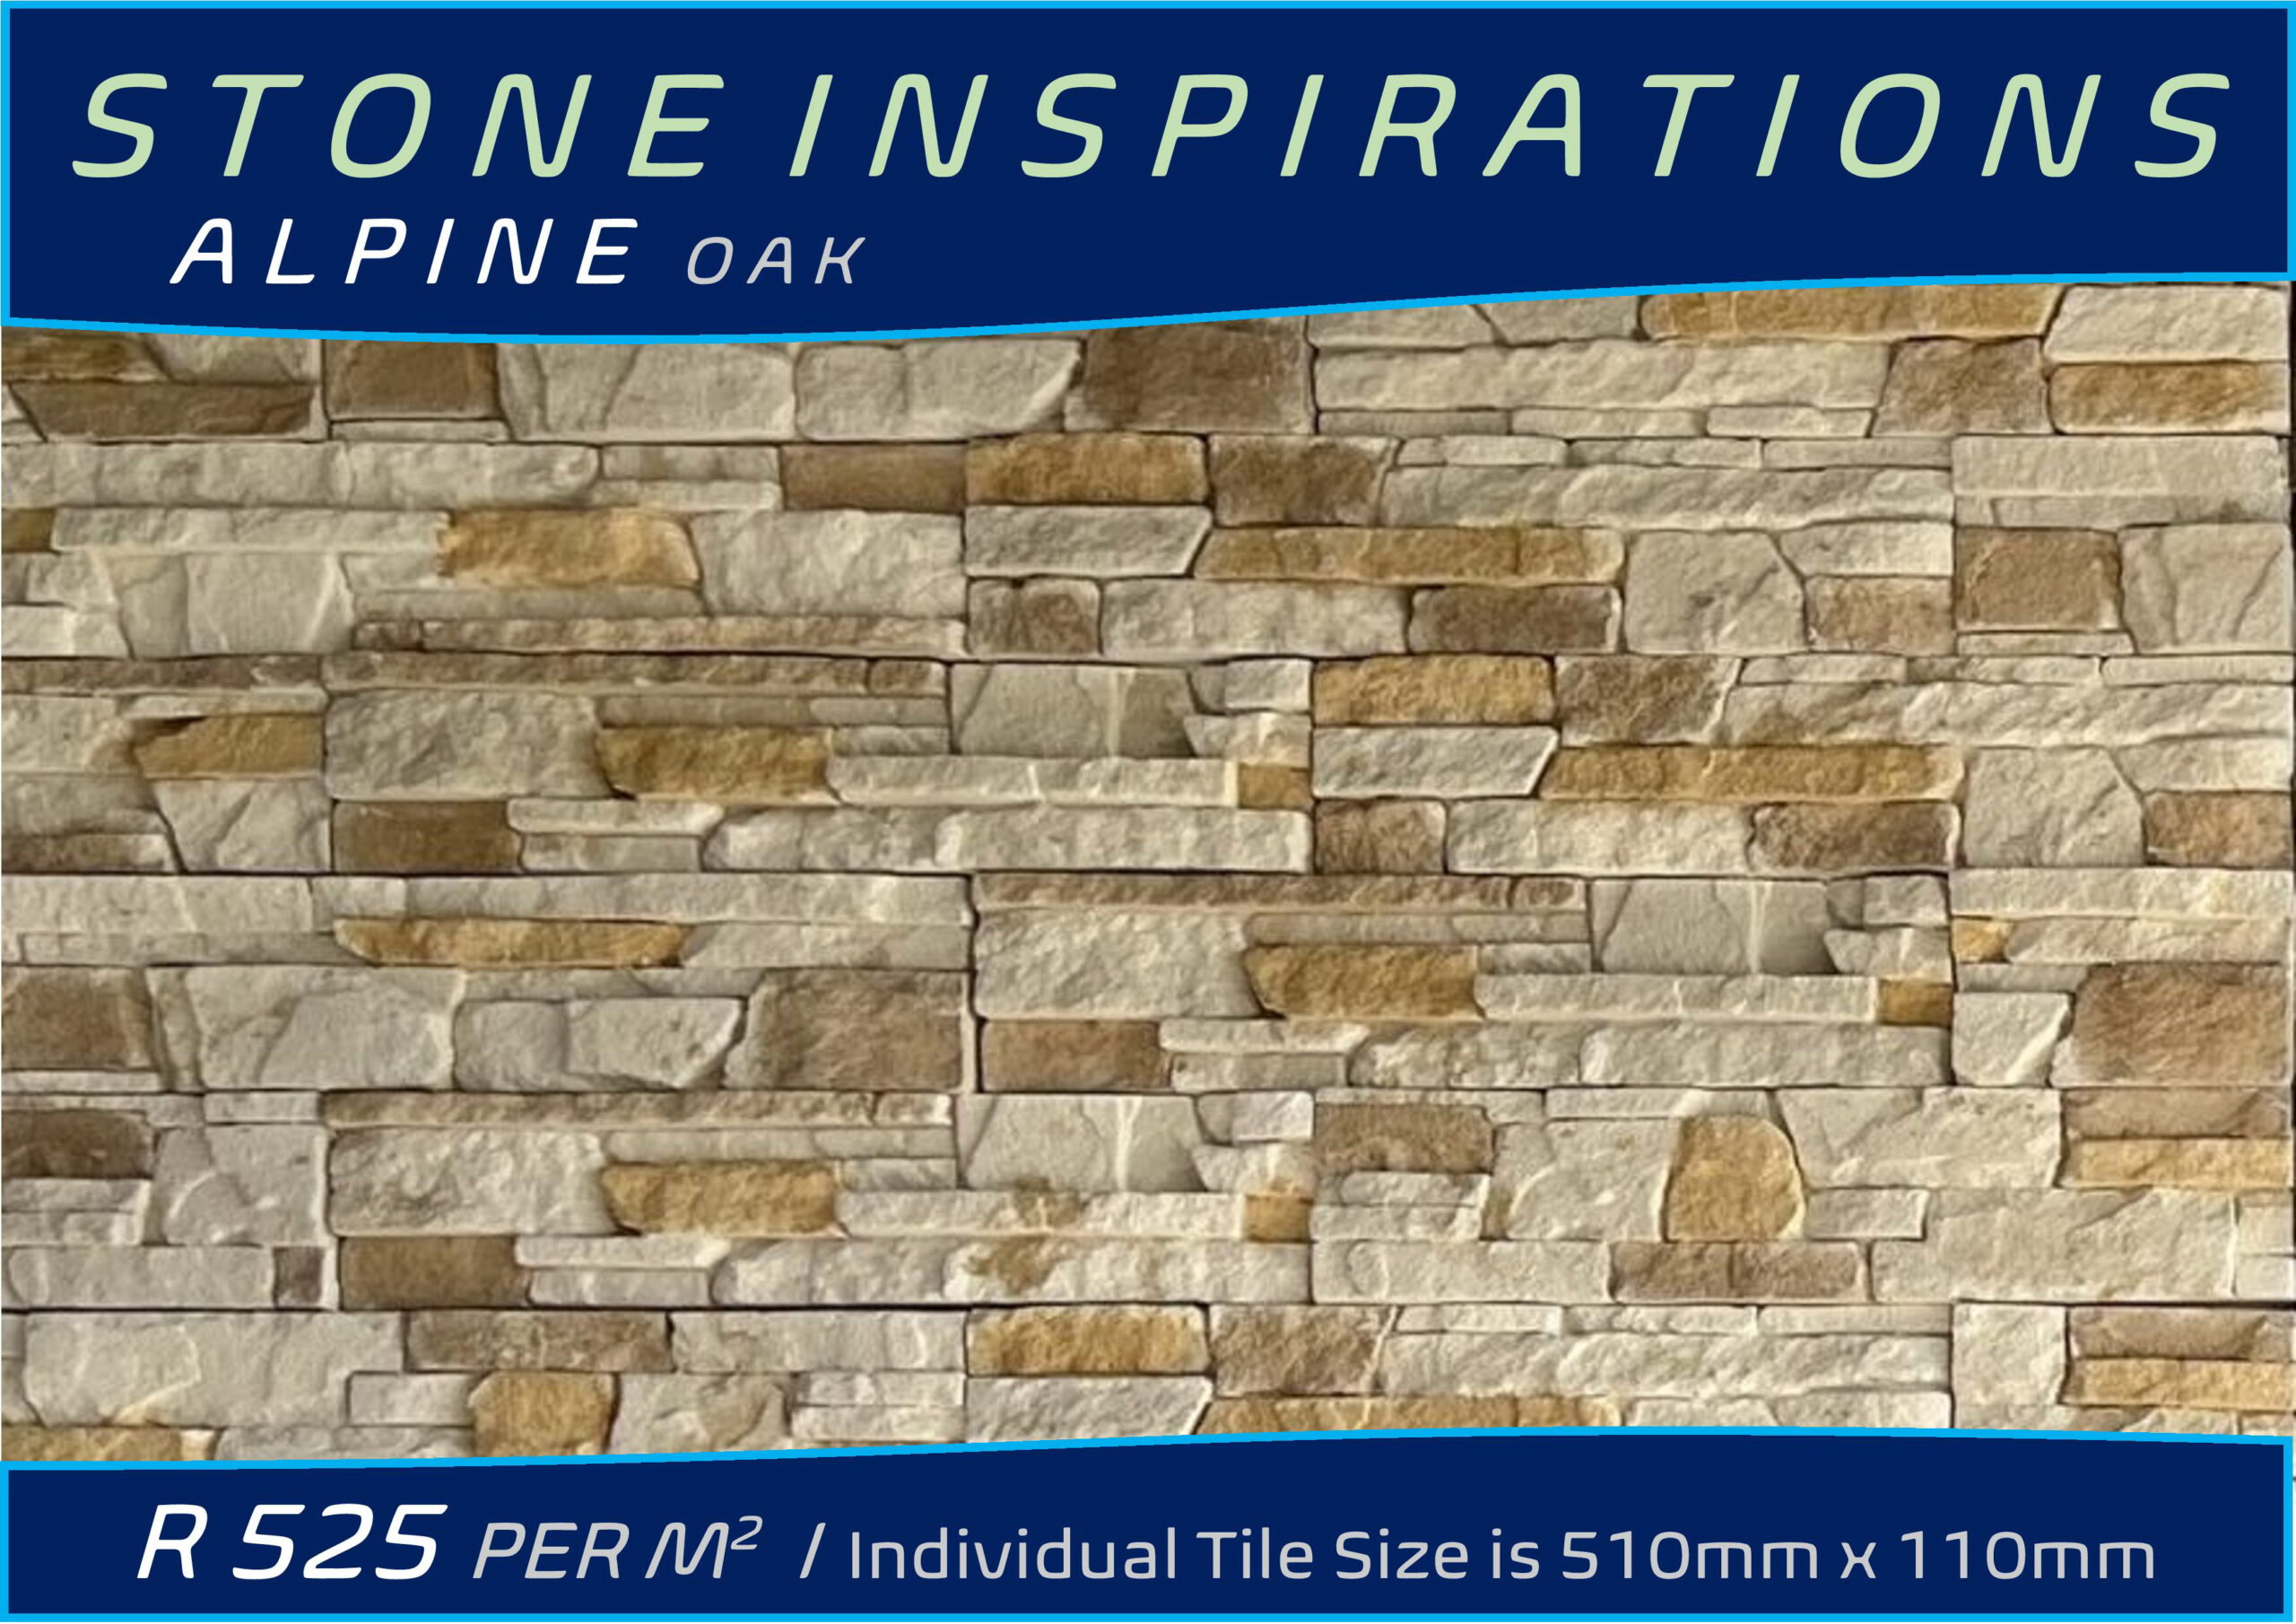 Stone Inspirations Alpine Oak